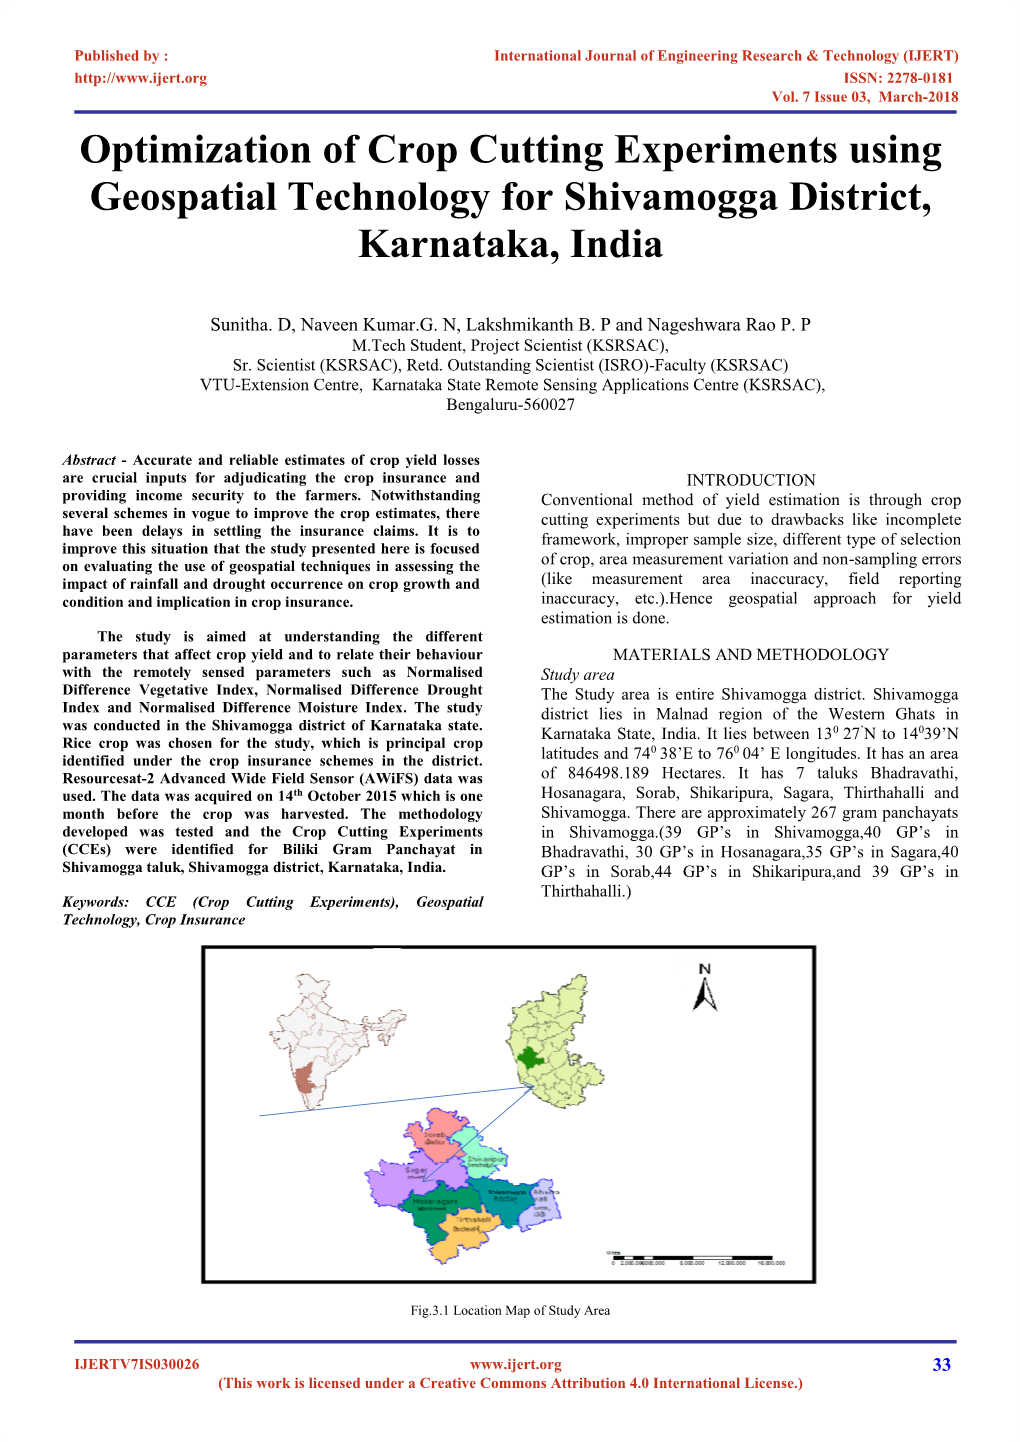 Optimization of Crop Cutting Experiments Using Geospatial Technology for Shivamogga District, Karnataka, India